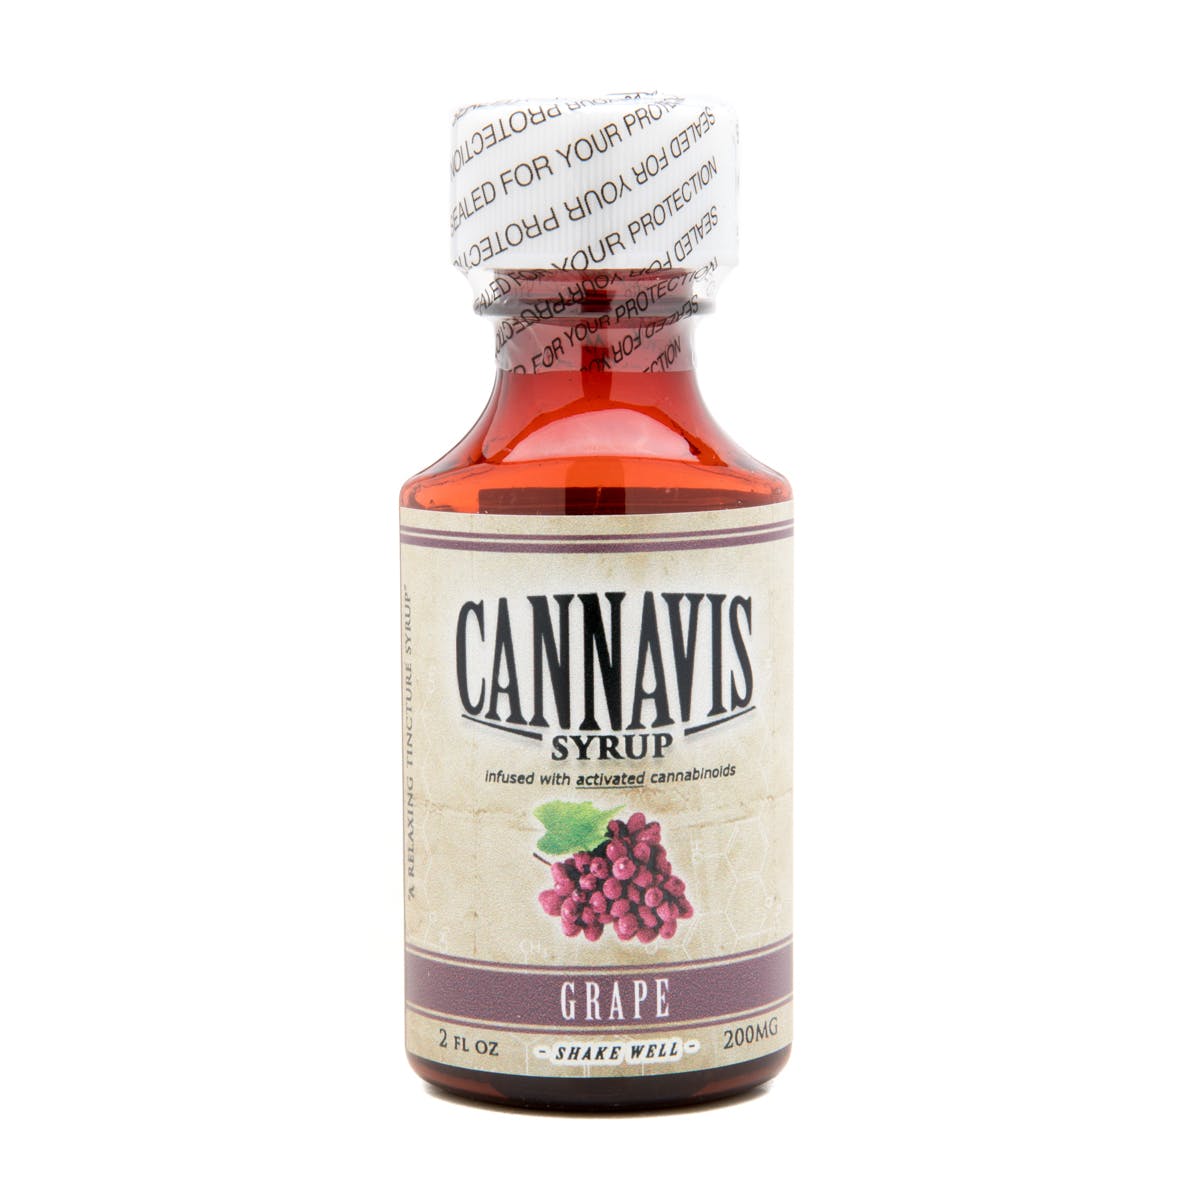 marijuana-dispensaries-elac-east-la-cannabis-in-east-los-angeles-cannavis-syrup-2c-grape-200mg